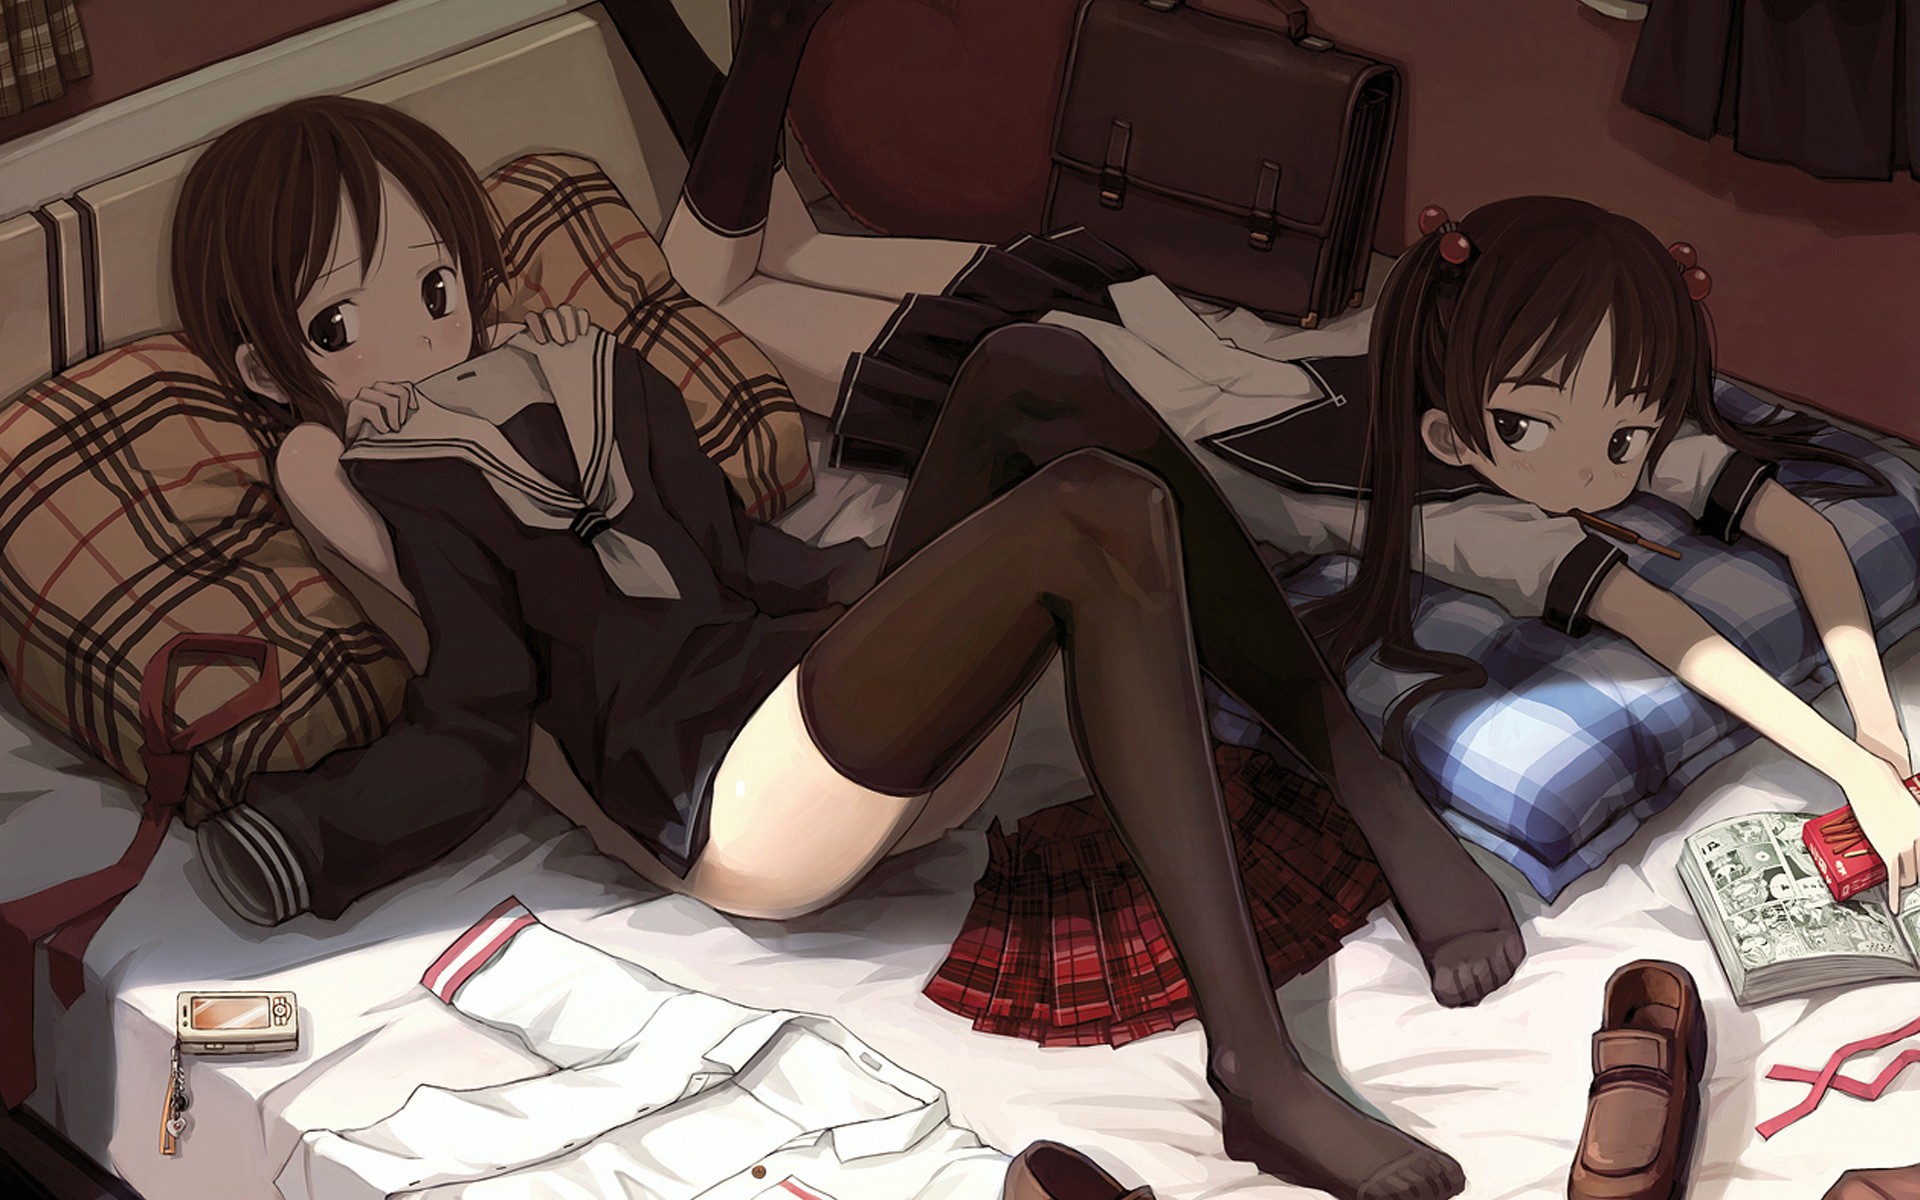 Anime 1920x1200 anime anime girls original characters school uniform socks crew socks bent legs stockings thigh-highs two women bed in bed black stockings loli